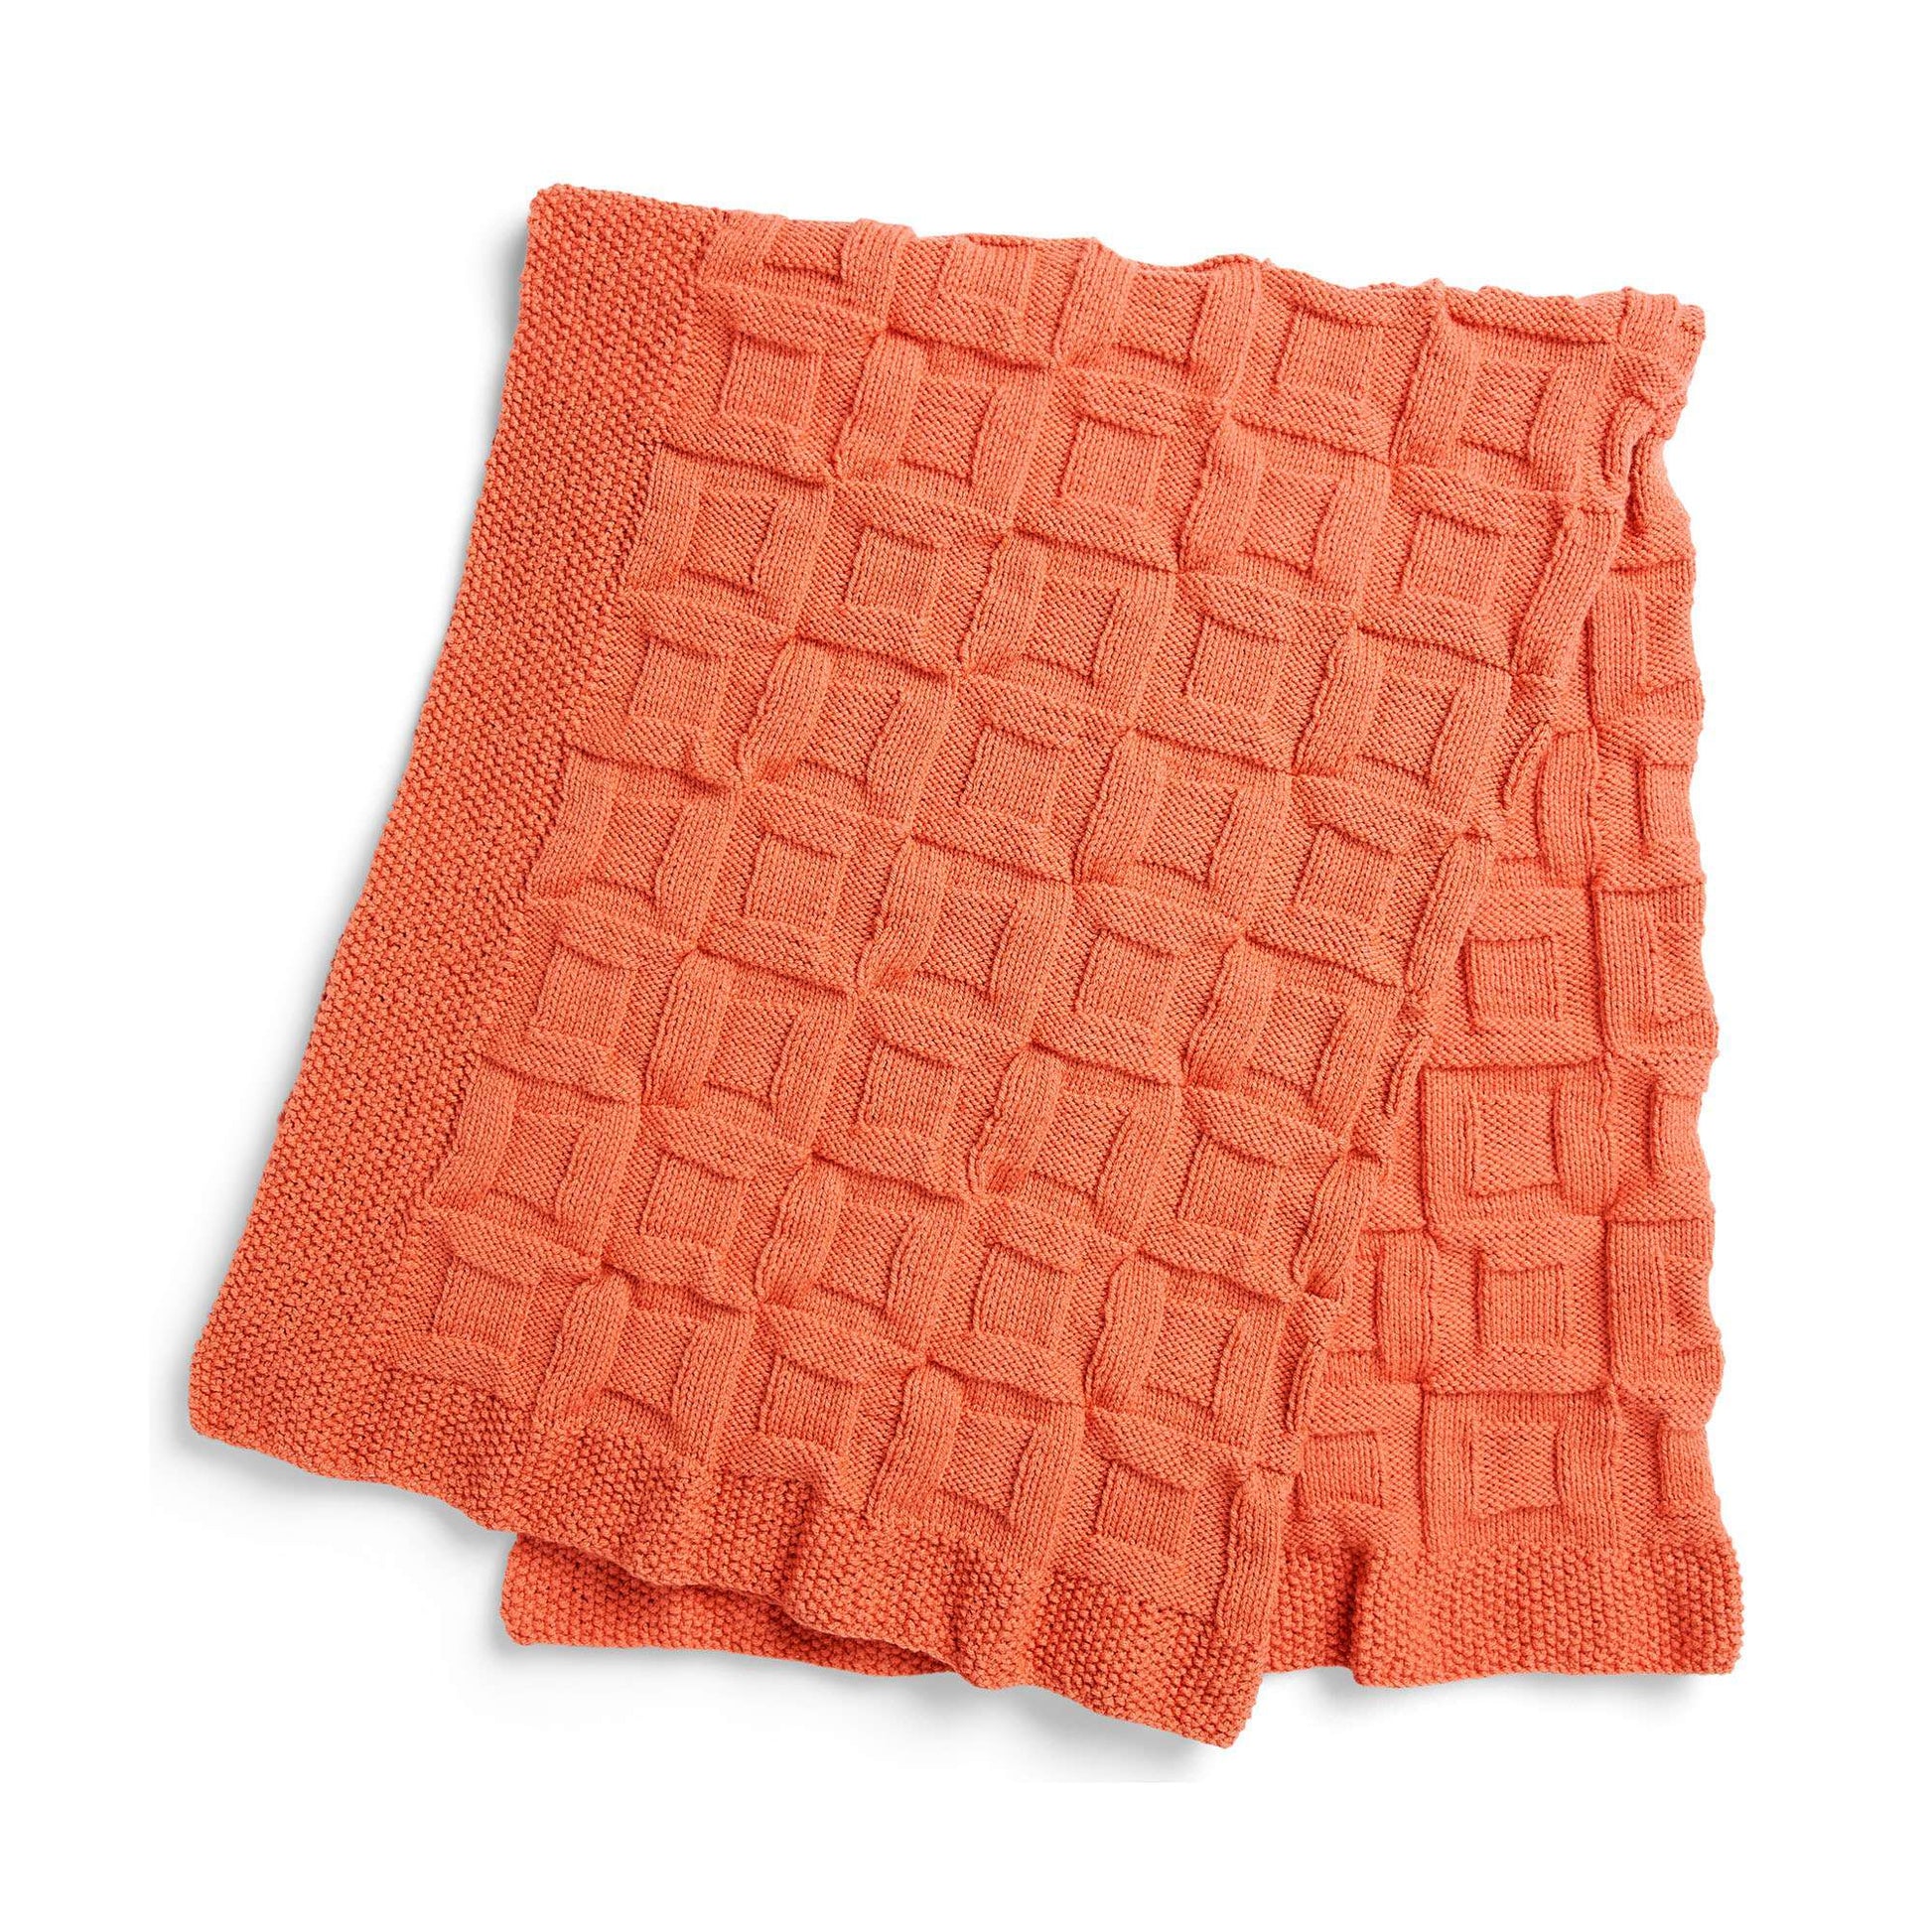 Free Caron Textured Checks Knit Blanket Pattern